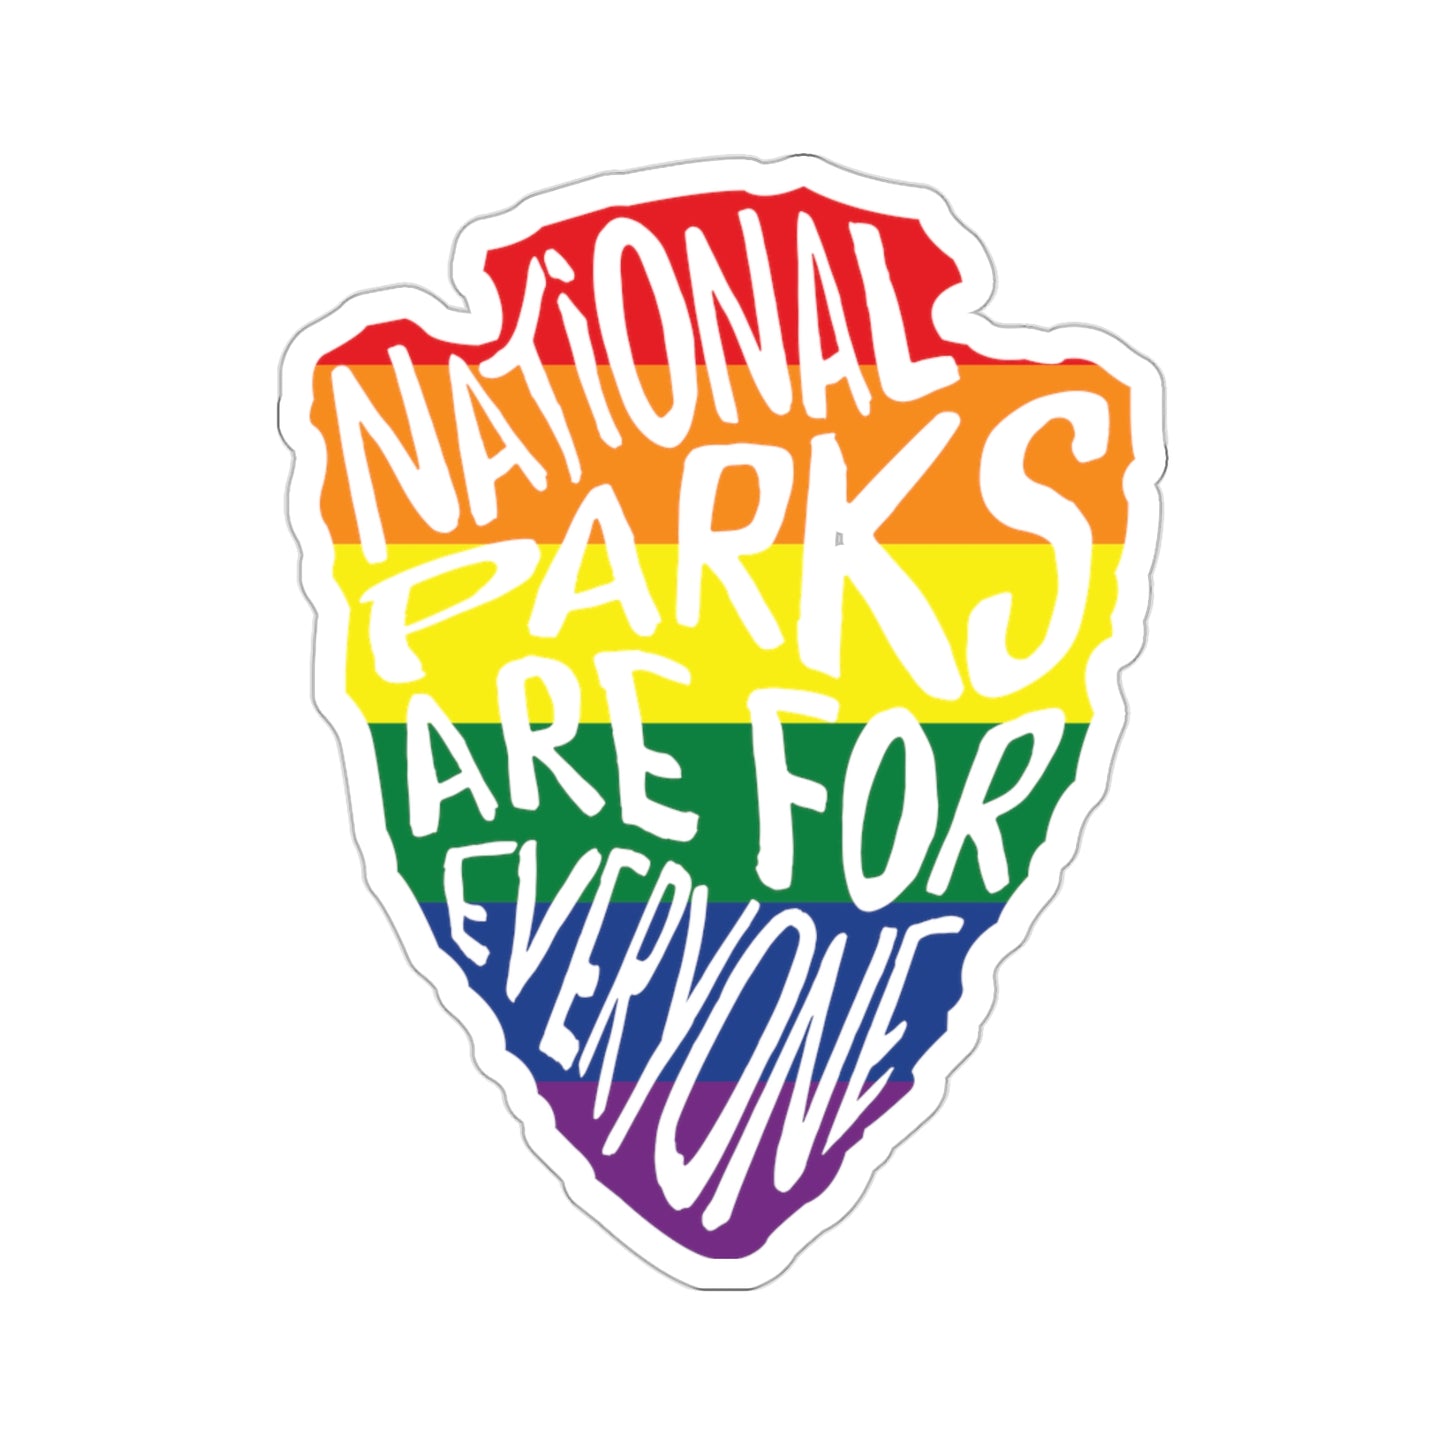 National Parks are for Everyone Sticker - Arrow Head Design